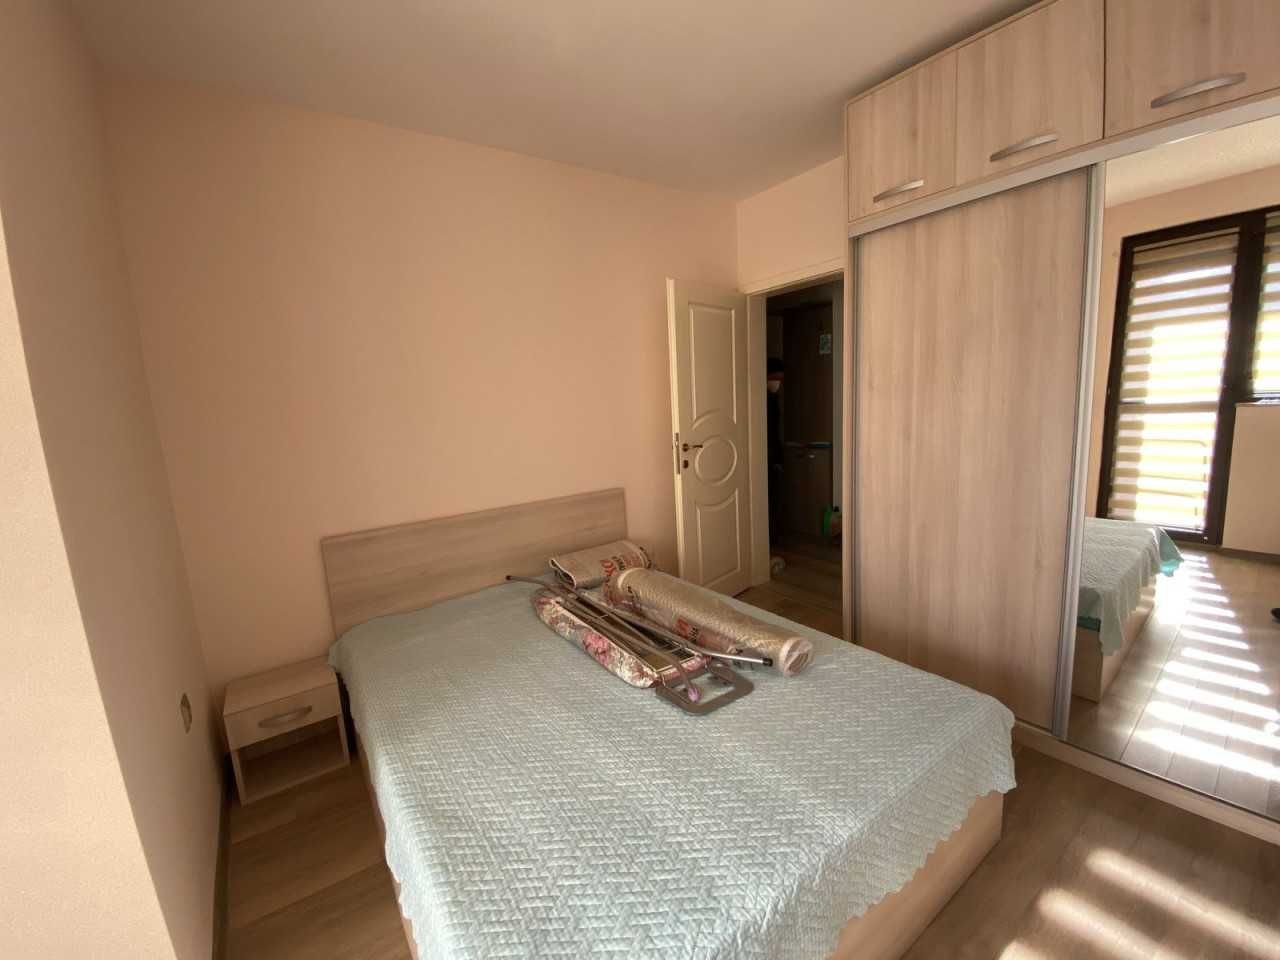 Двустаен апартамент в Каменица